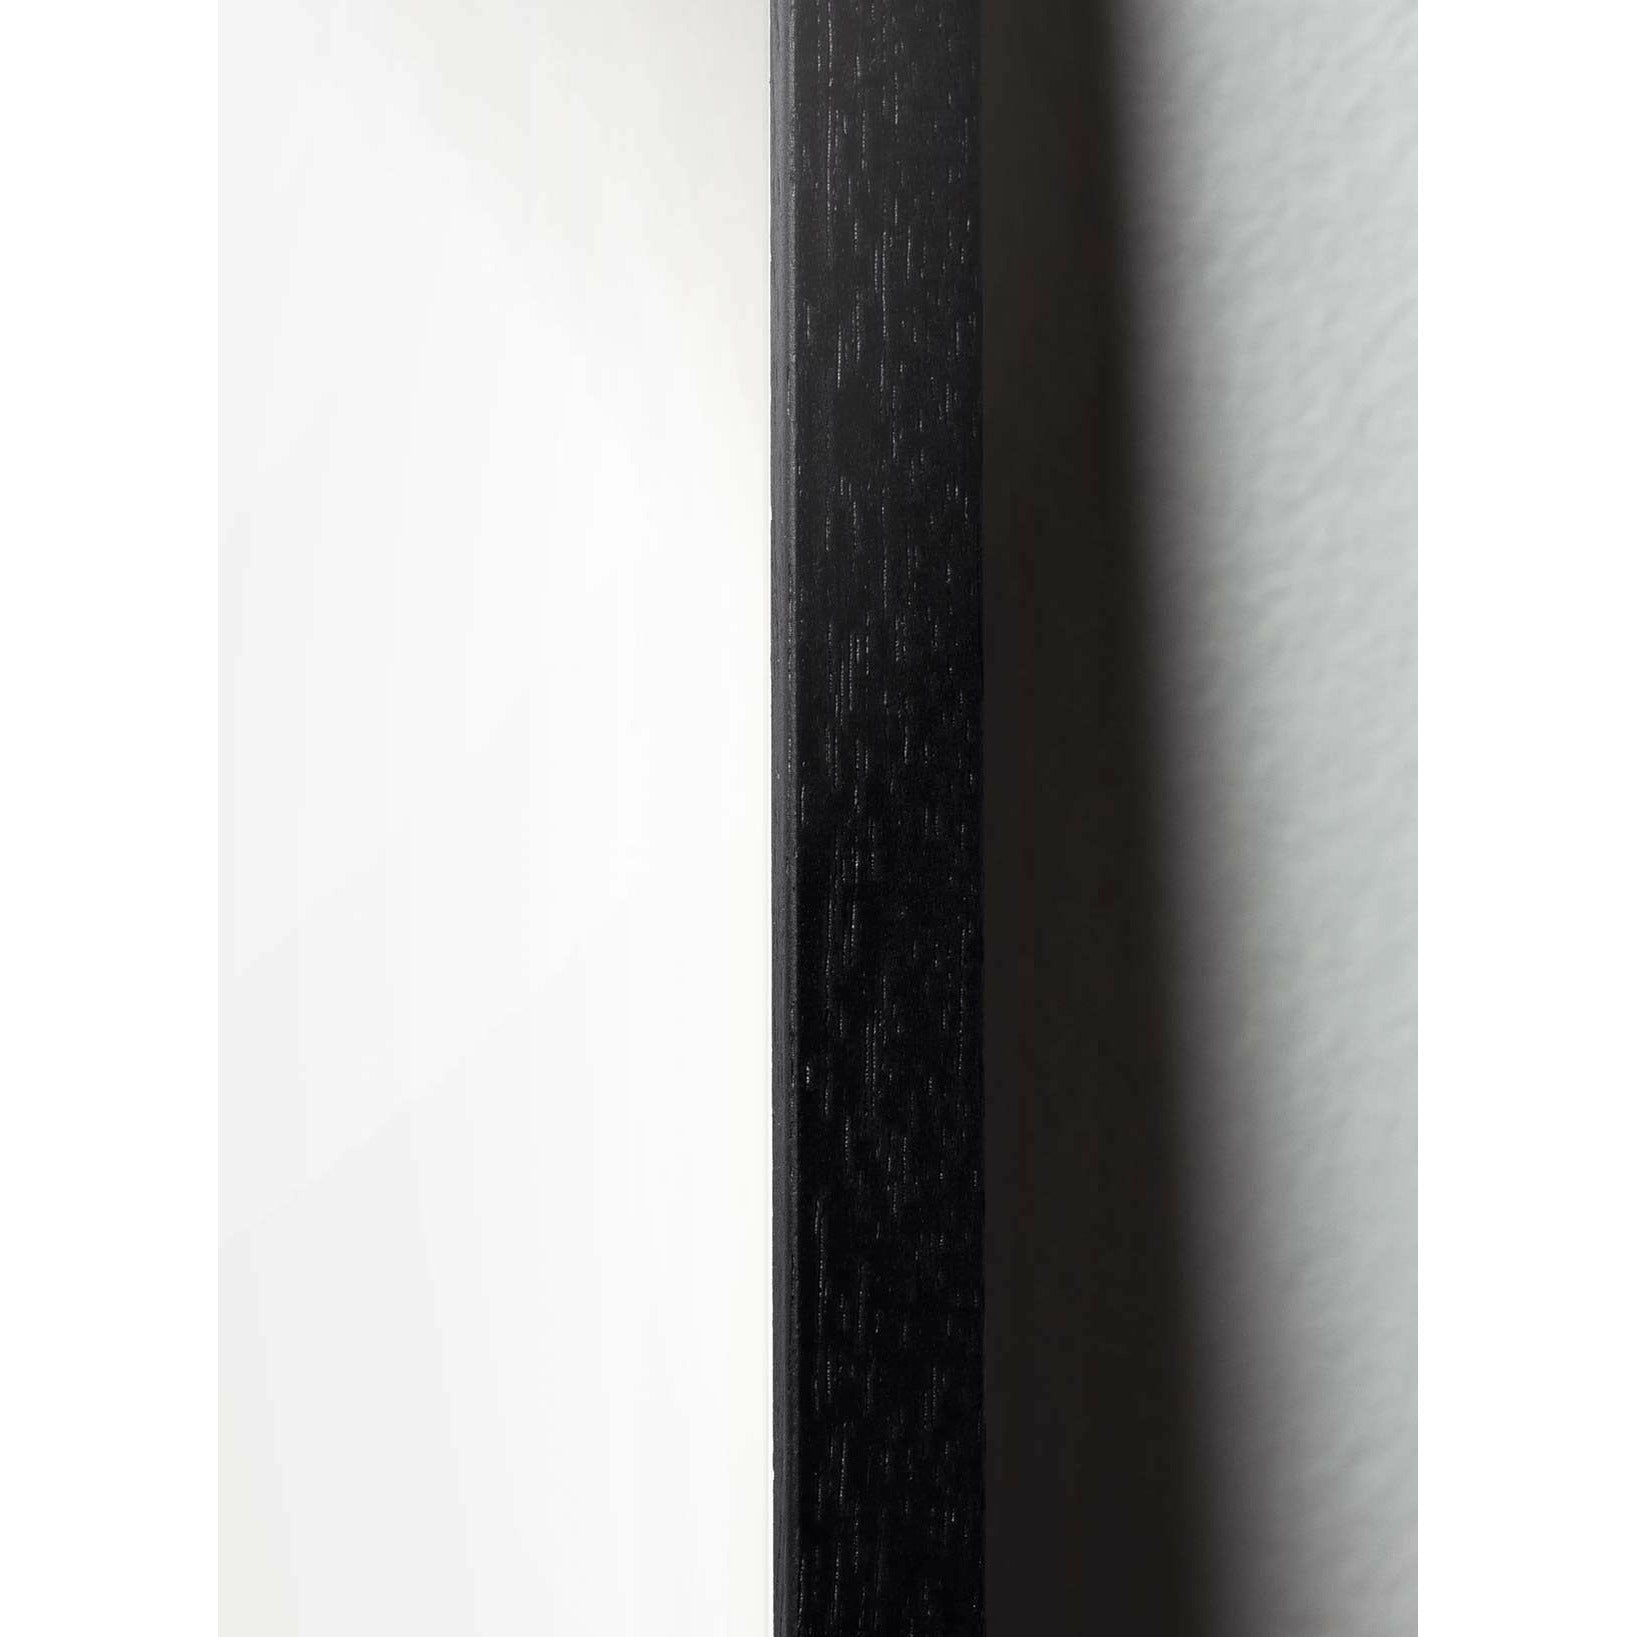 Póster de línea de caída de creación, marco en madera lacada negra de 70x100 cm, fondo blanco